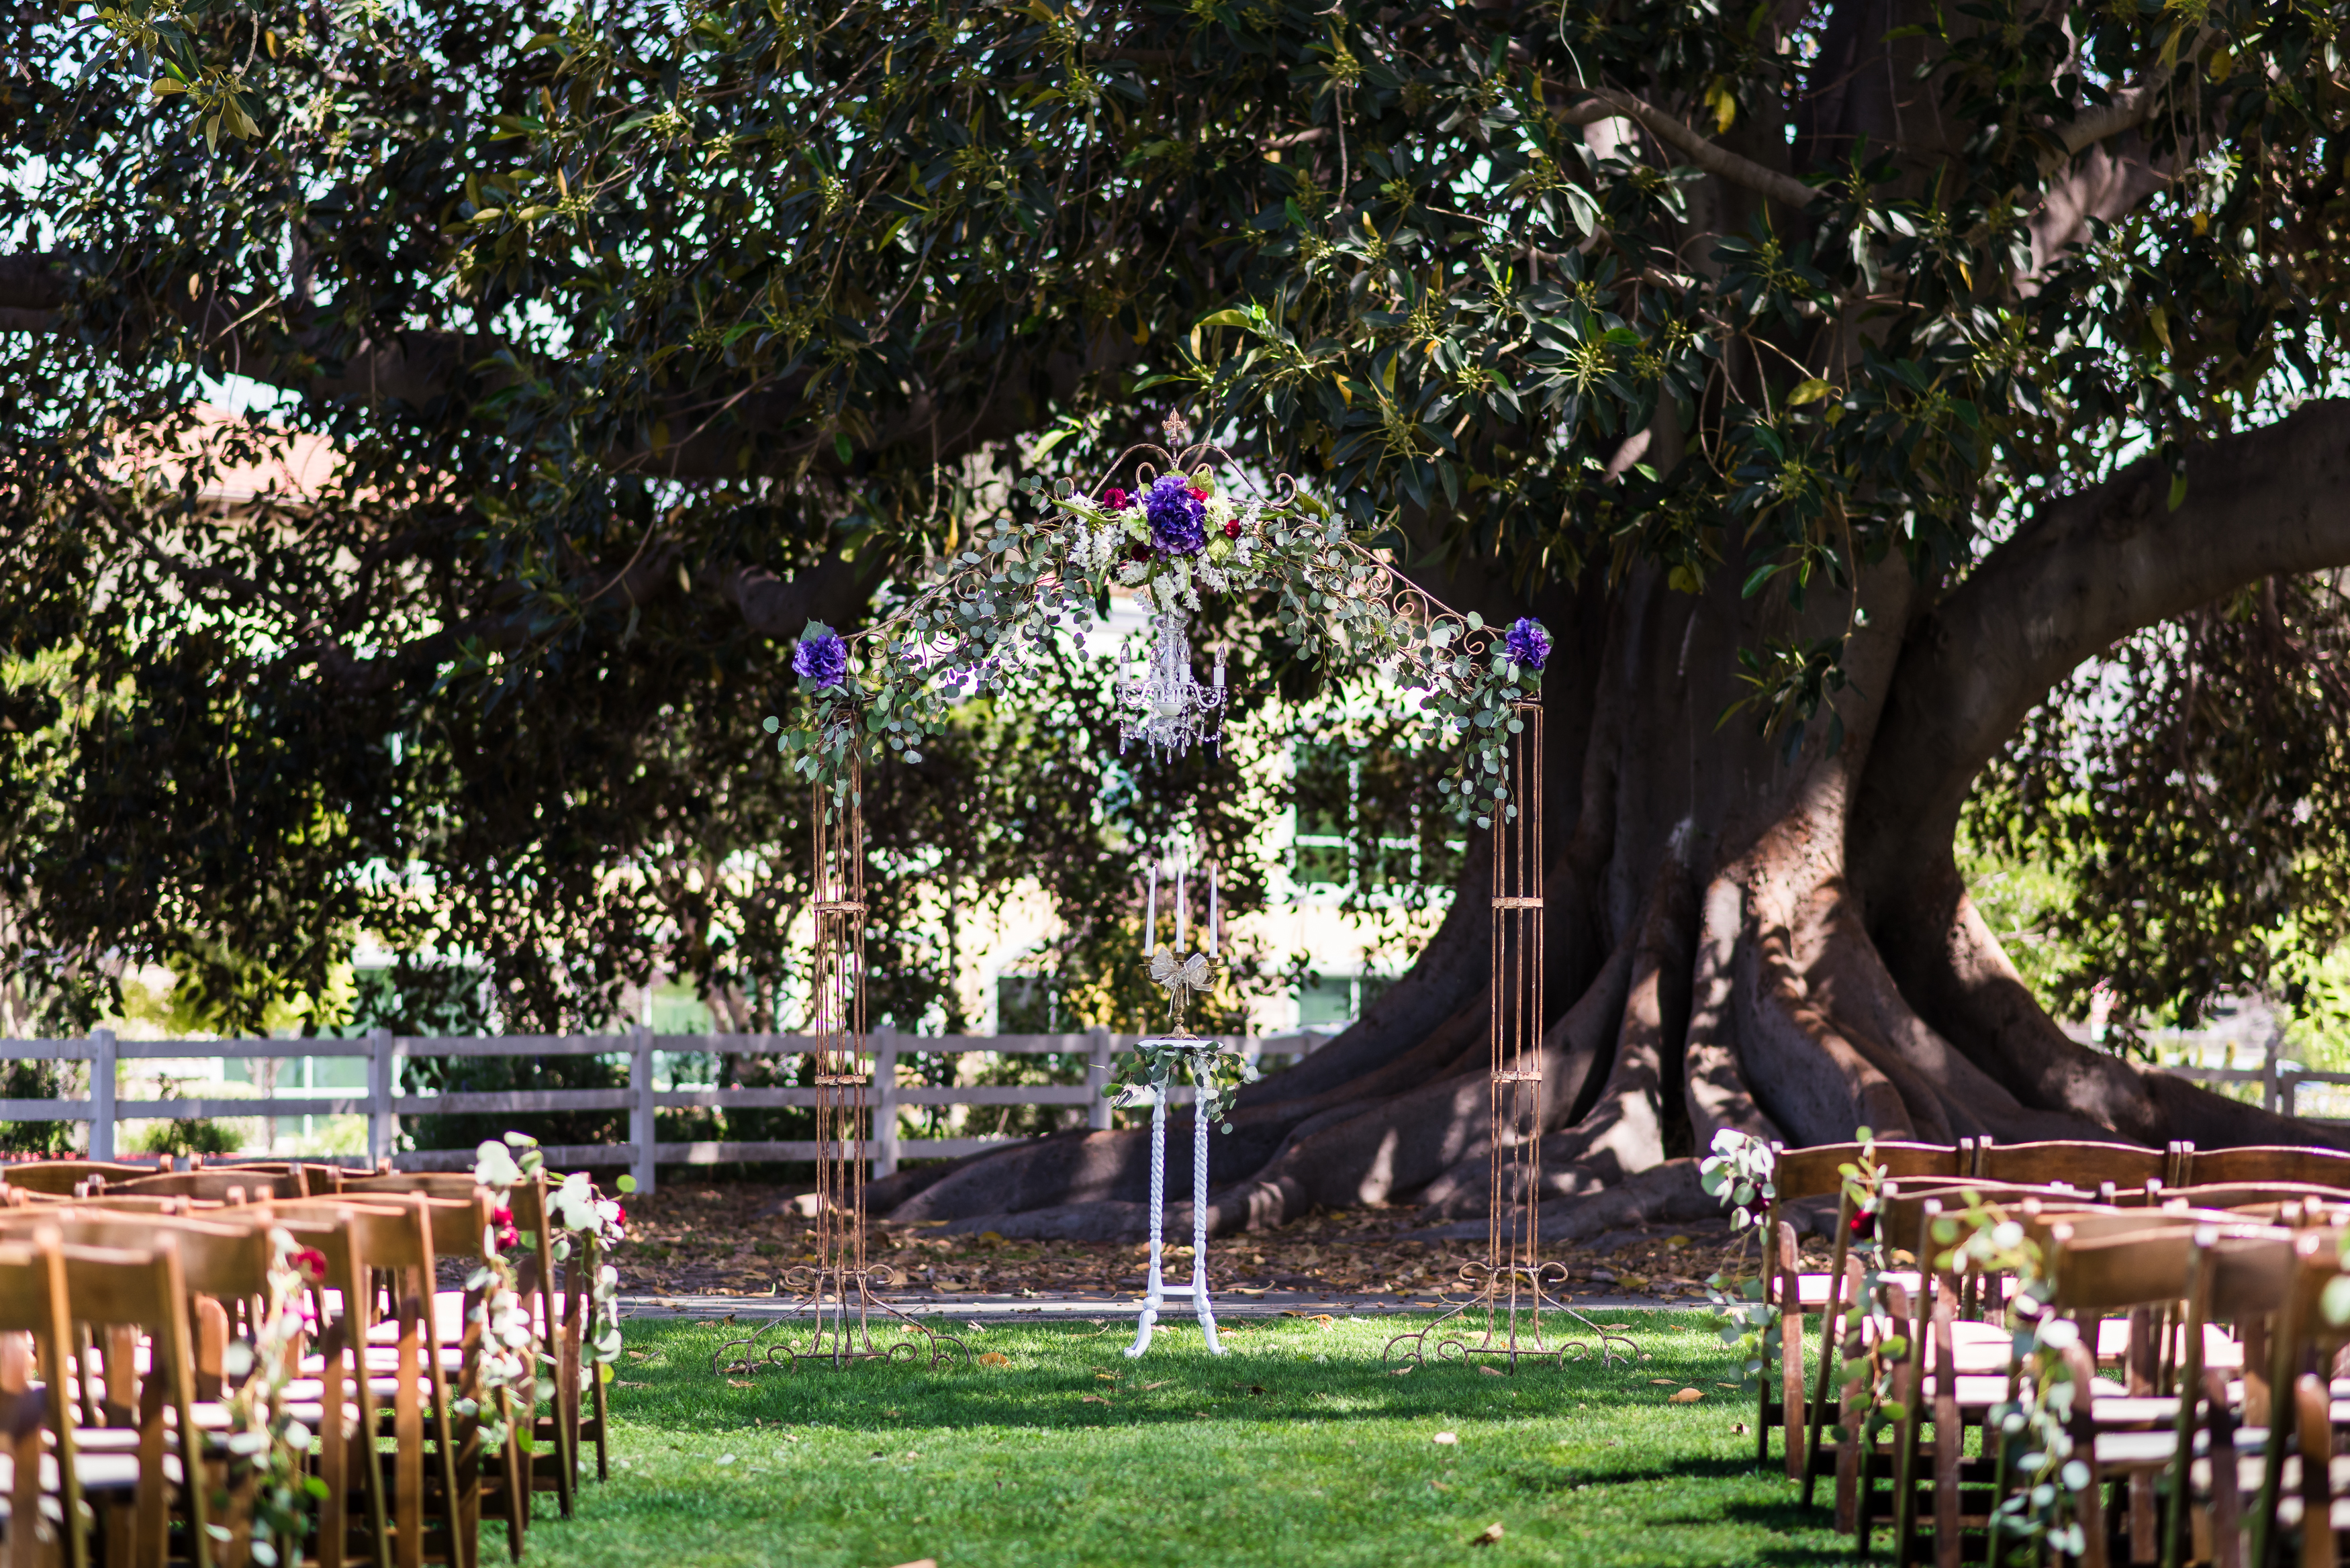 Ceremony alter by tree at Camarillo Ranch House